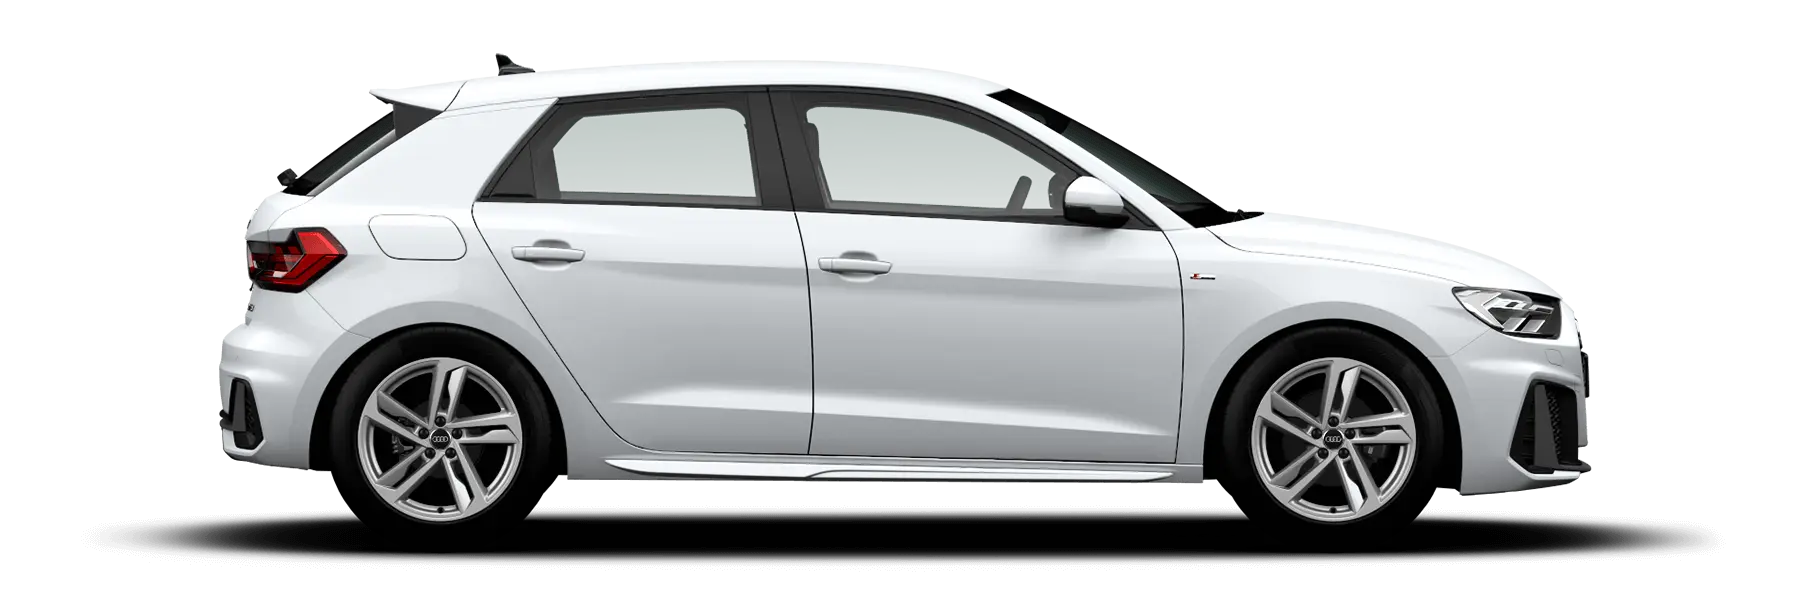 Audi A1 exterior - Side Profile